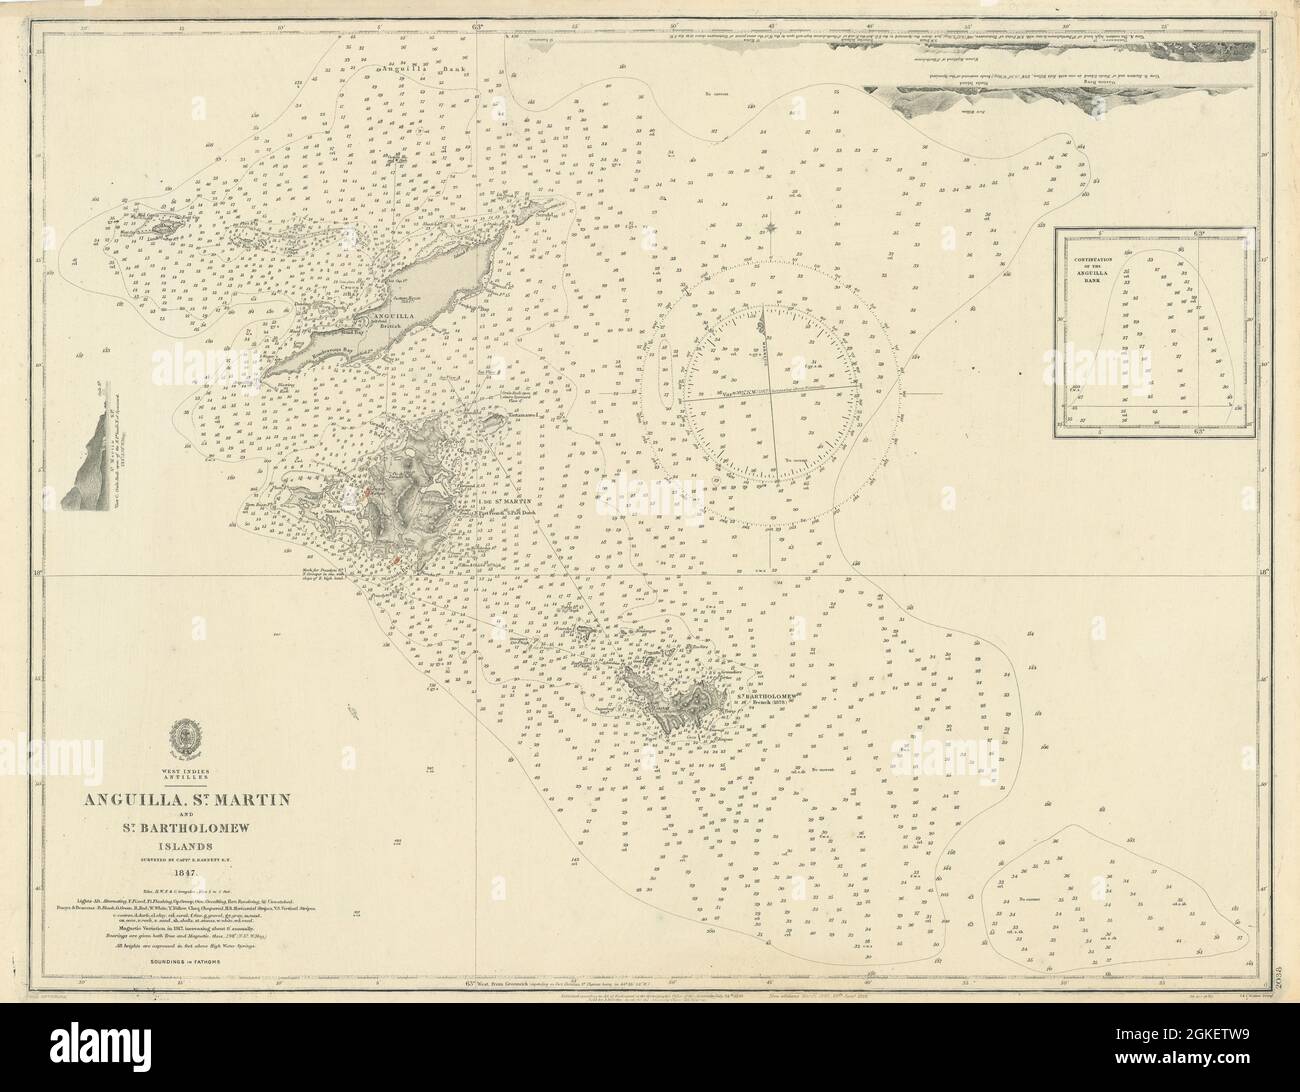 Antilles Anguilla St Martin Bartholomew Islands ADMIRALTY chart 1850 (1918) map Stock Photo